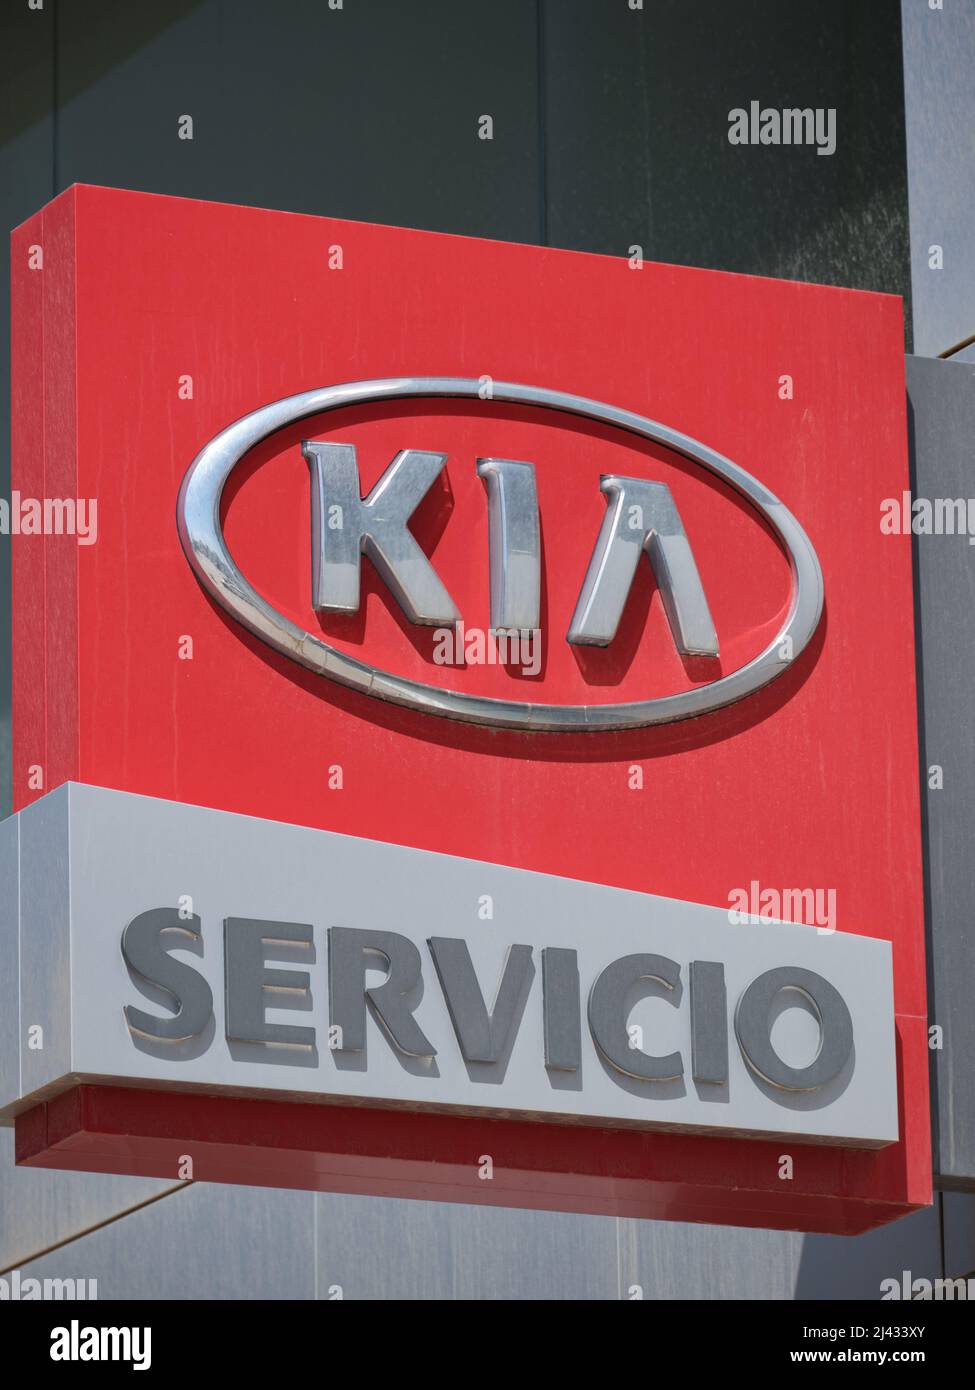 Kia service logo and text sing of korean car dealership in Fuengirola, Malaga province, Spain. Stock Photo